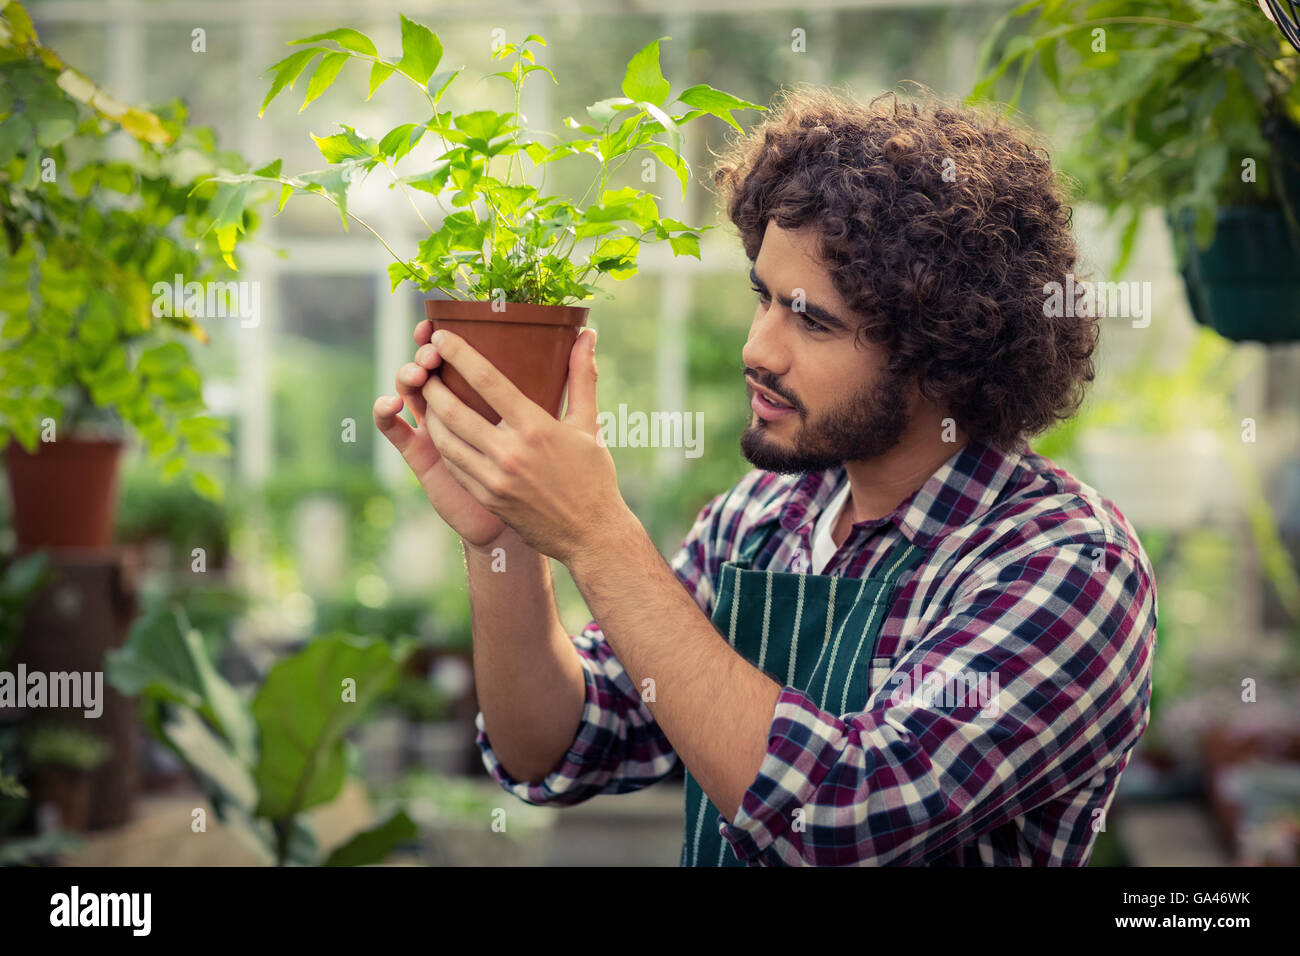 Giardiniere maschio esaminando pianta in vaso Foto Stock